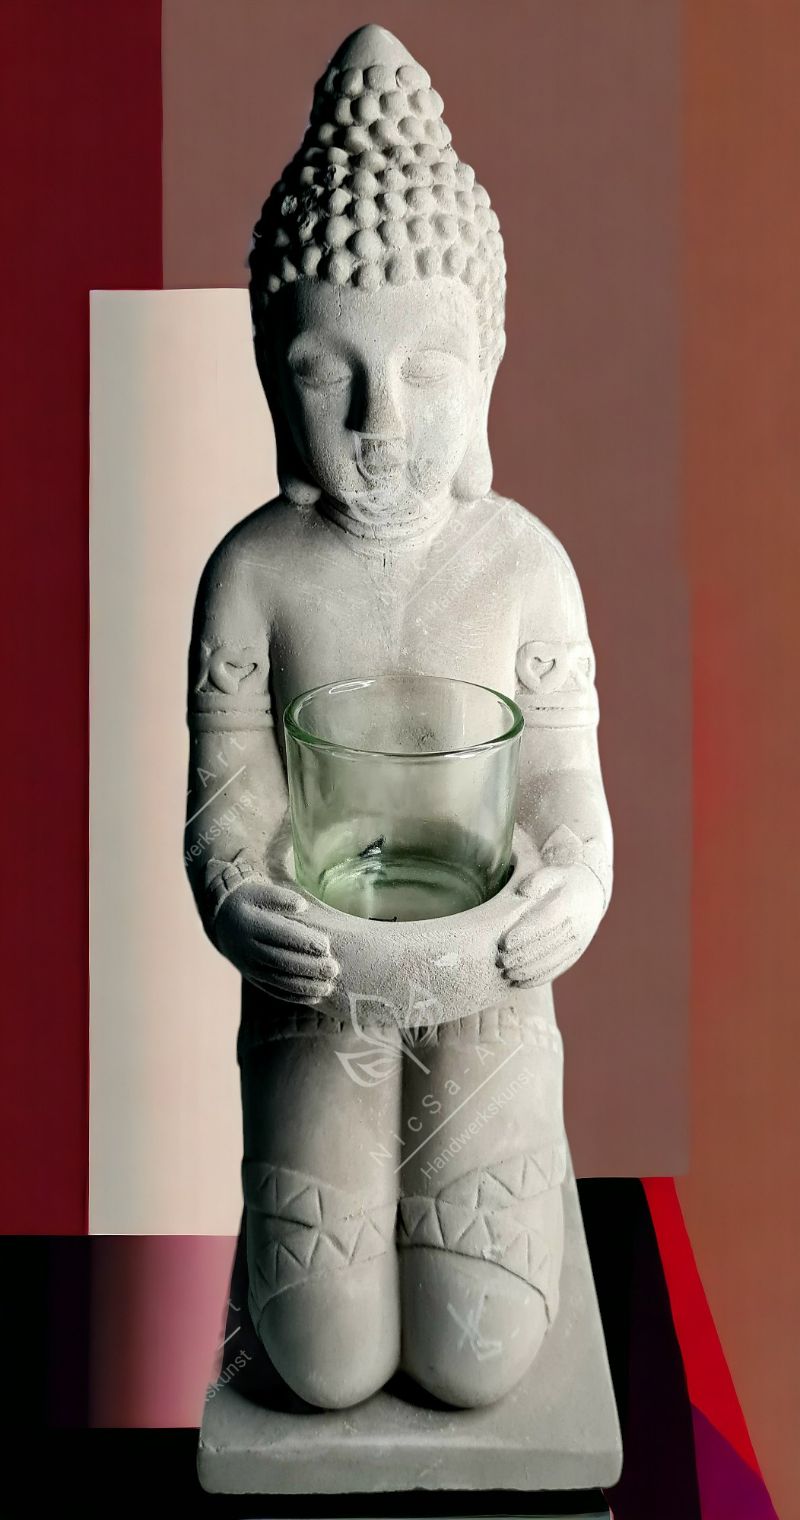  - Latexform Buddha Teelichthalter No.5 Mold Gießform - NicSa-Art NL001275